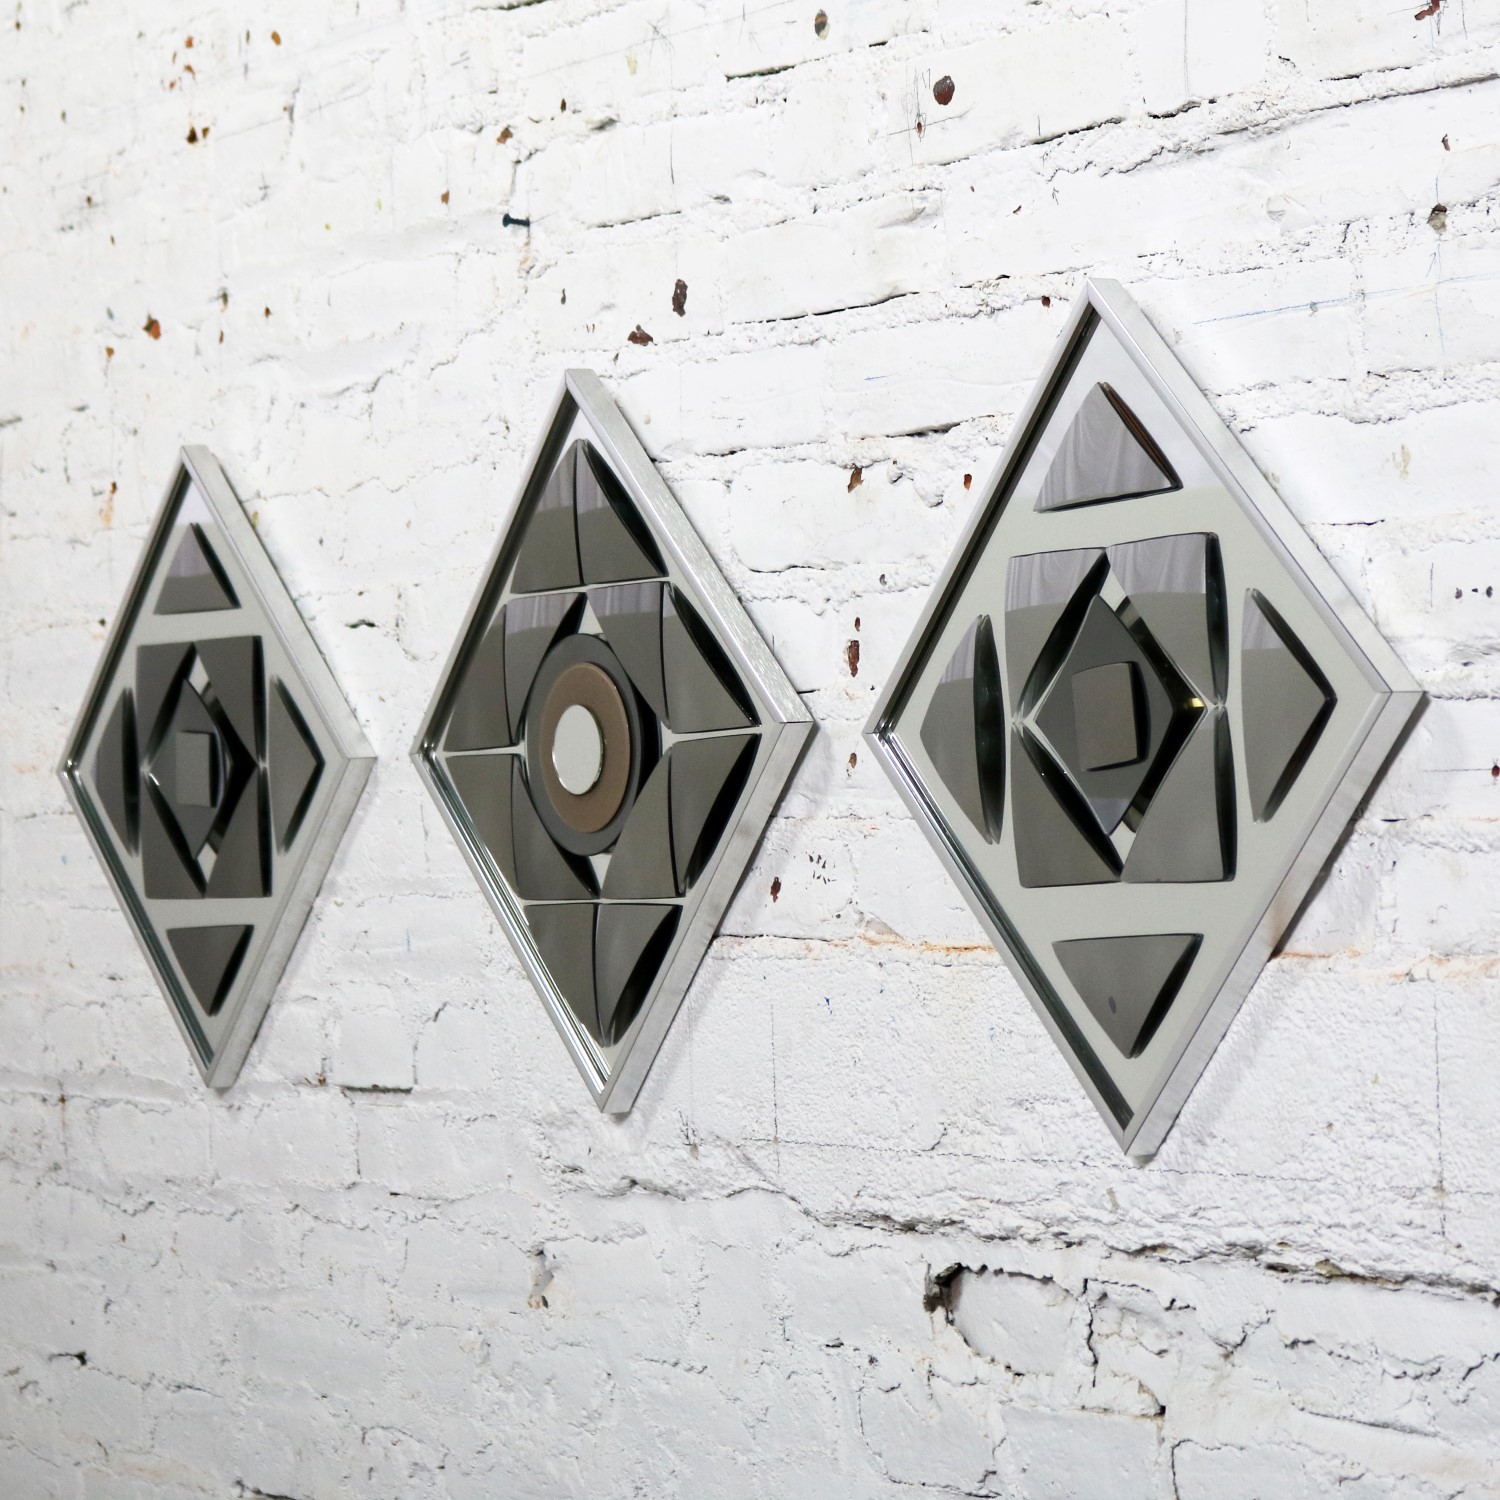 Pop Art Op Art Geometric Trio of Framed Mirror Wall Sculptures by Hal Bienenfeld